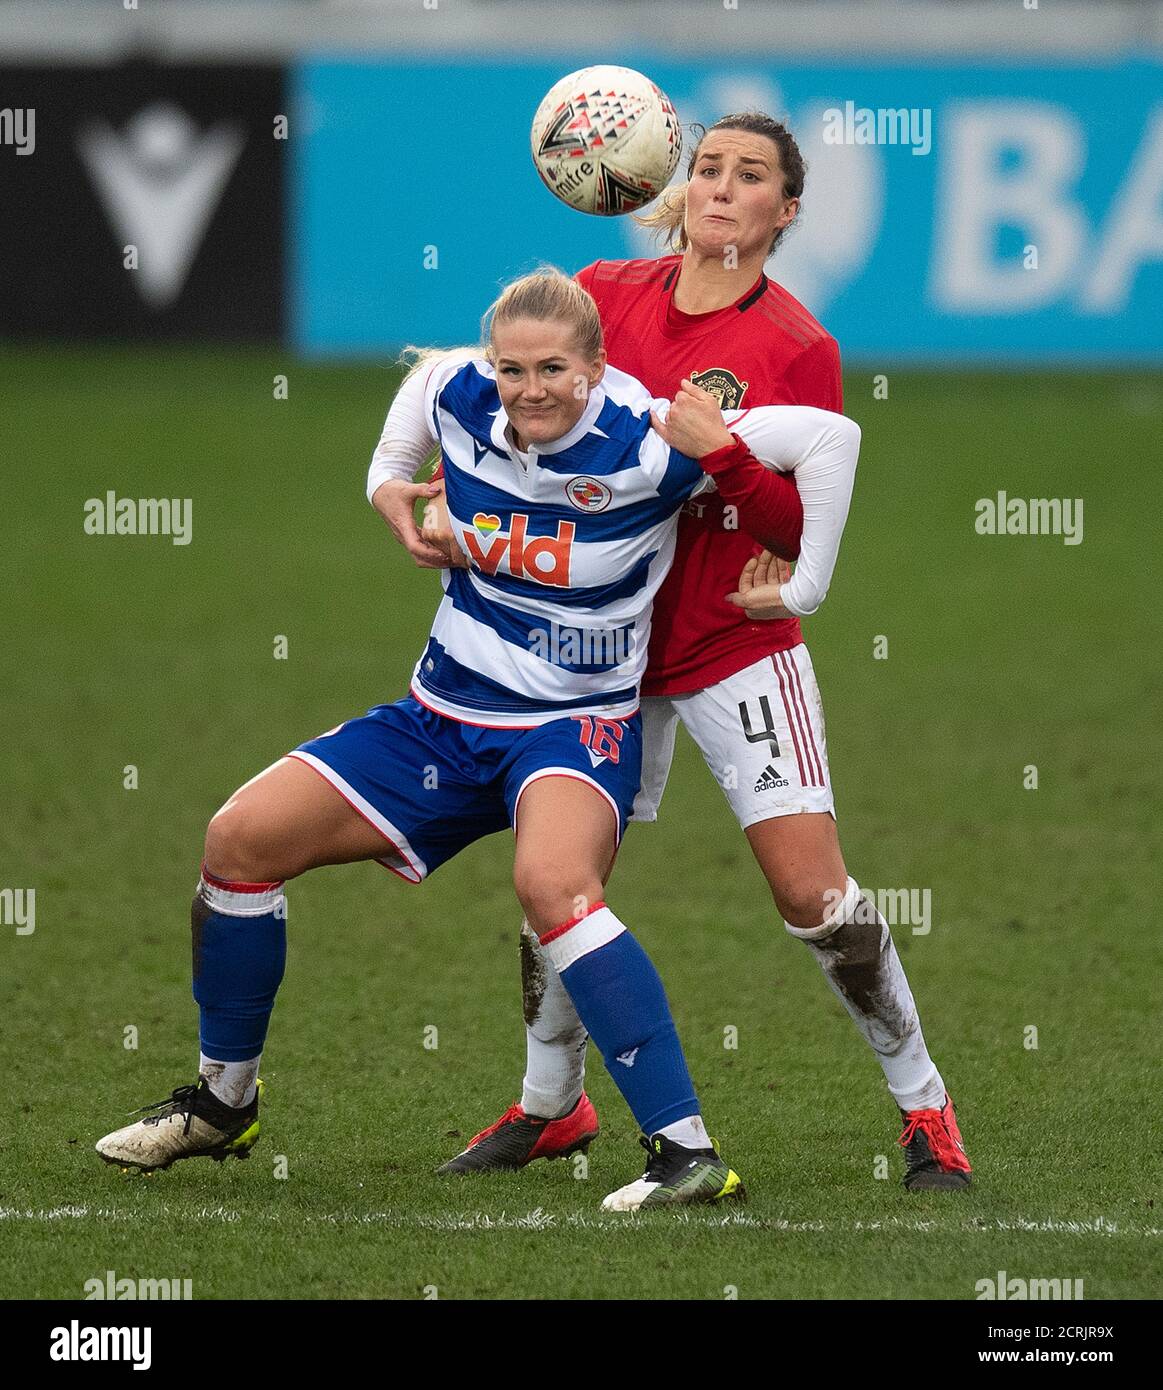 Lesens Lisa-Marie Utland und Manchester United Amy Turner BILDNACHWEIS : © MARK PAIN / ALAMY STOCK FOTO Stockfoto